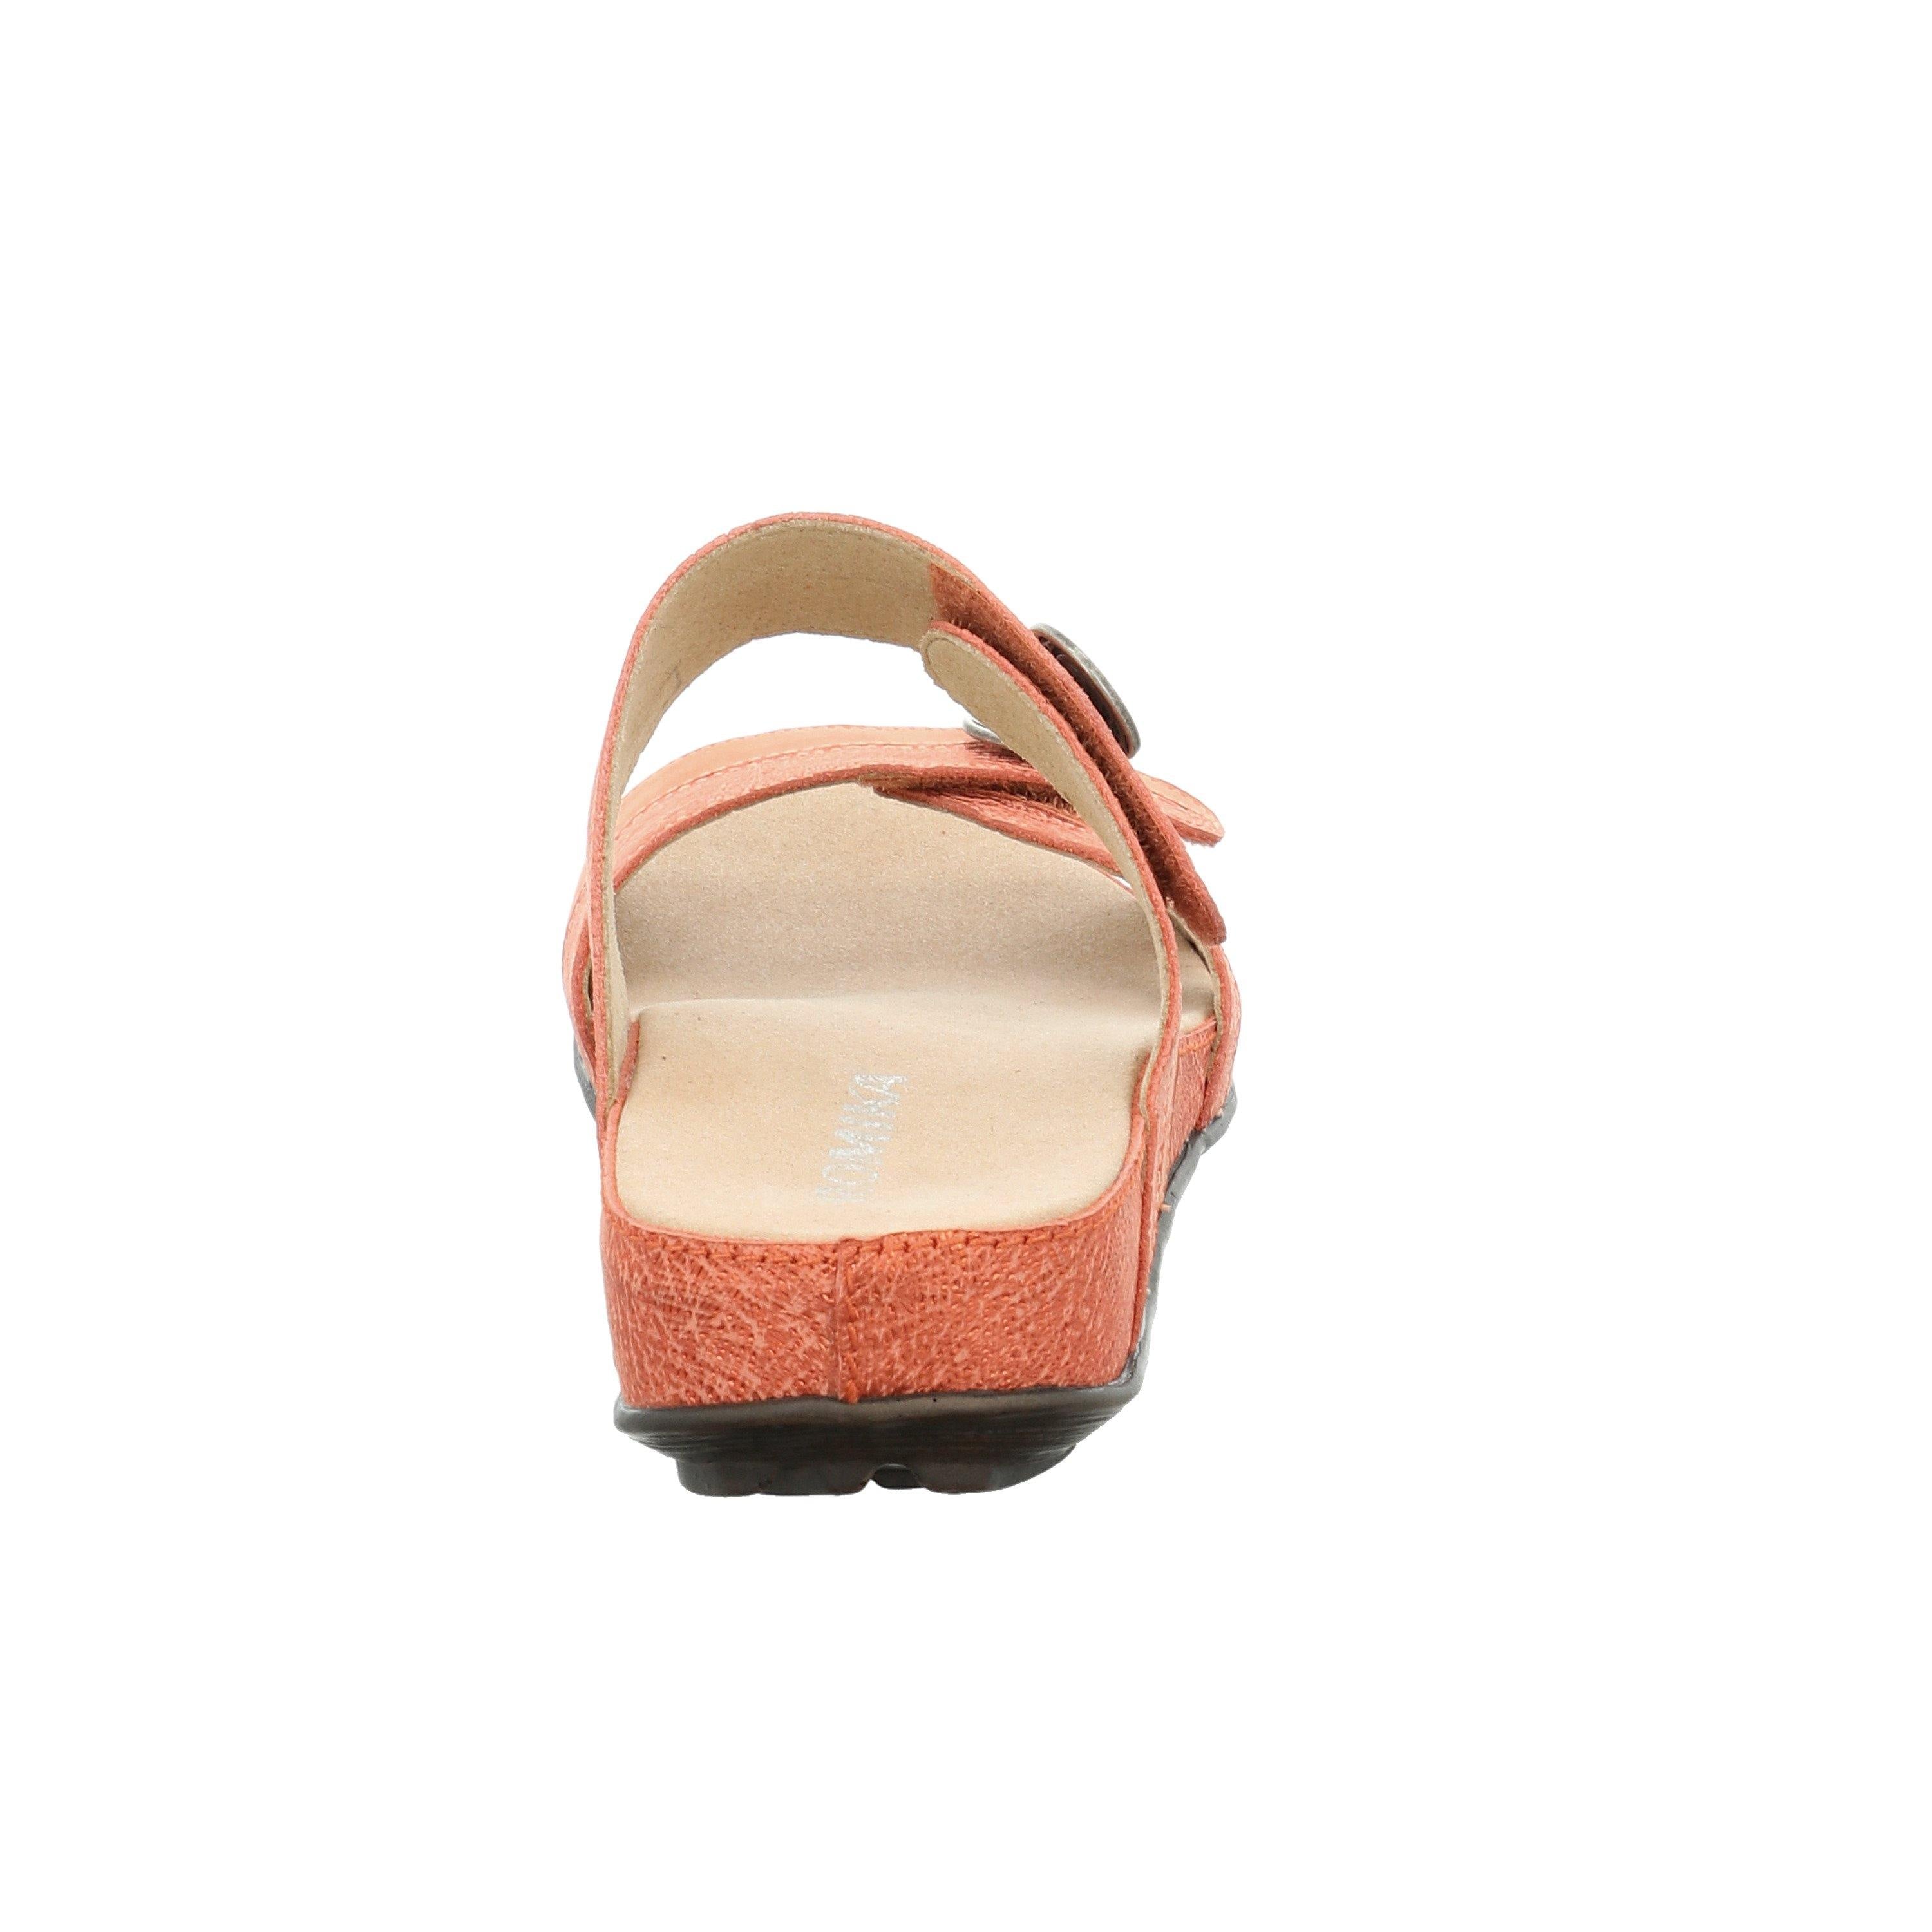 Sandal style FIDSCHI 22 by Romika USA